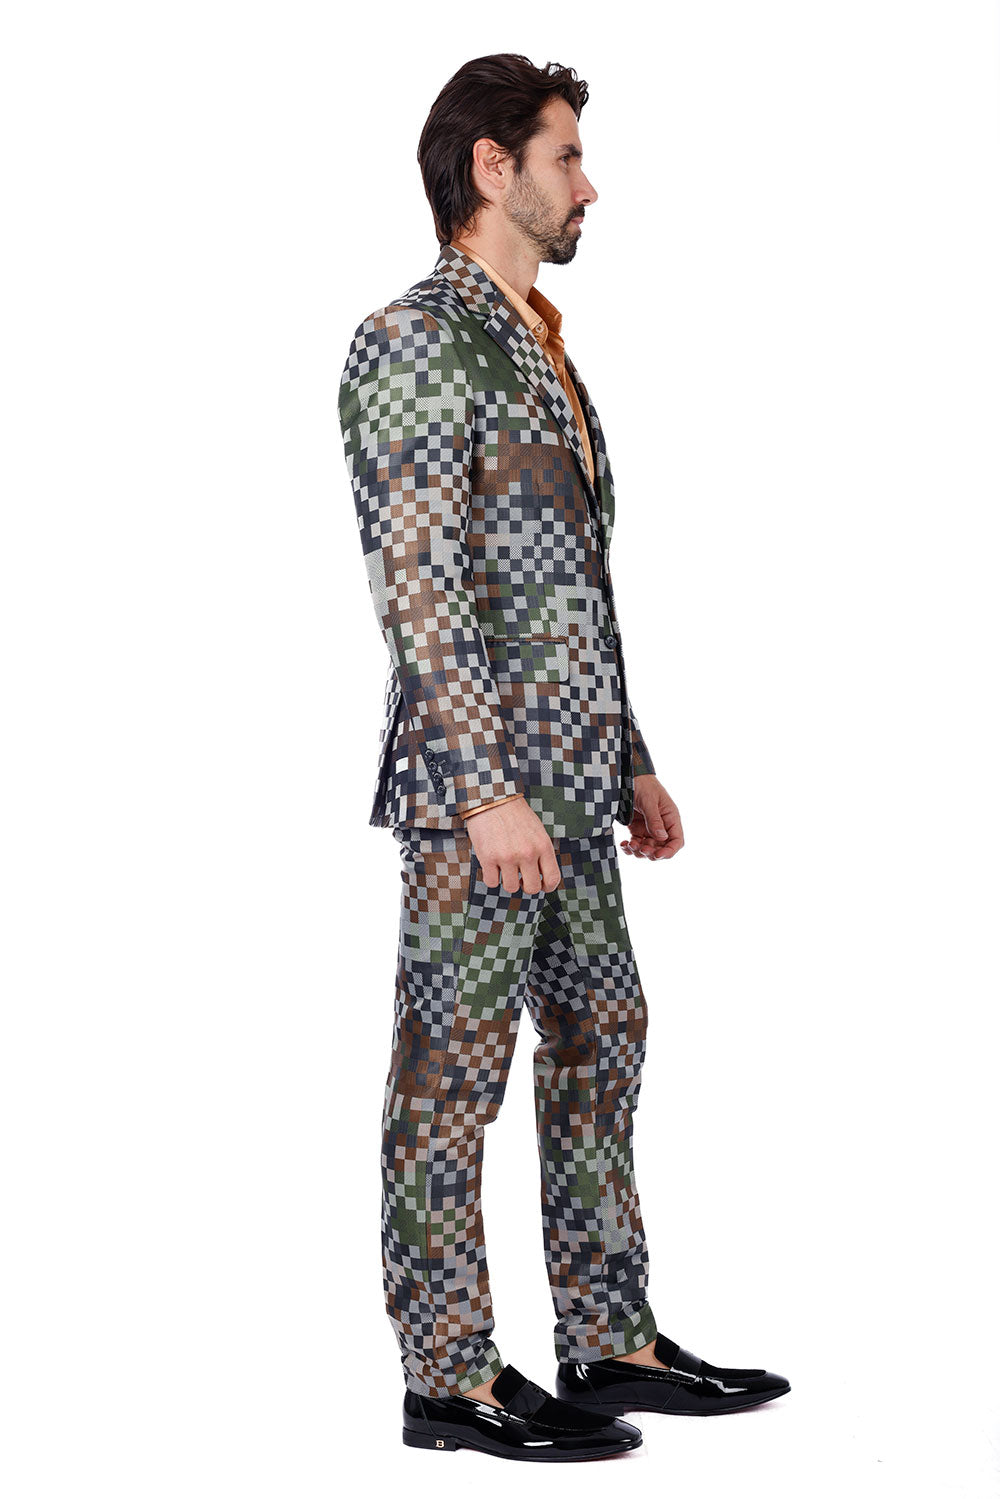 BARABAS Men's Camouflage Cotton Notched Lapel Suit 3SU28 Green